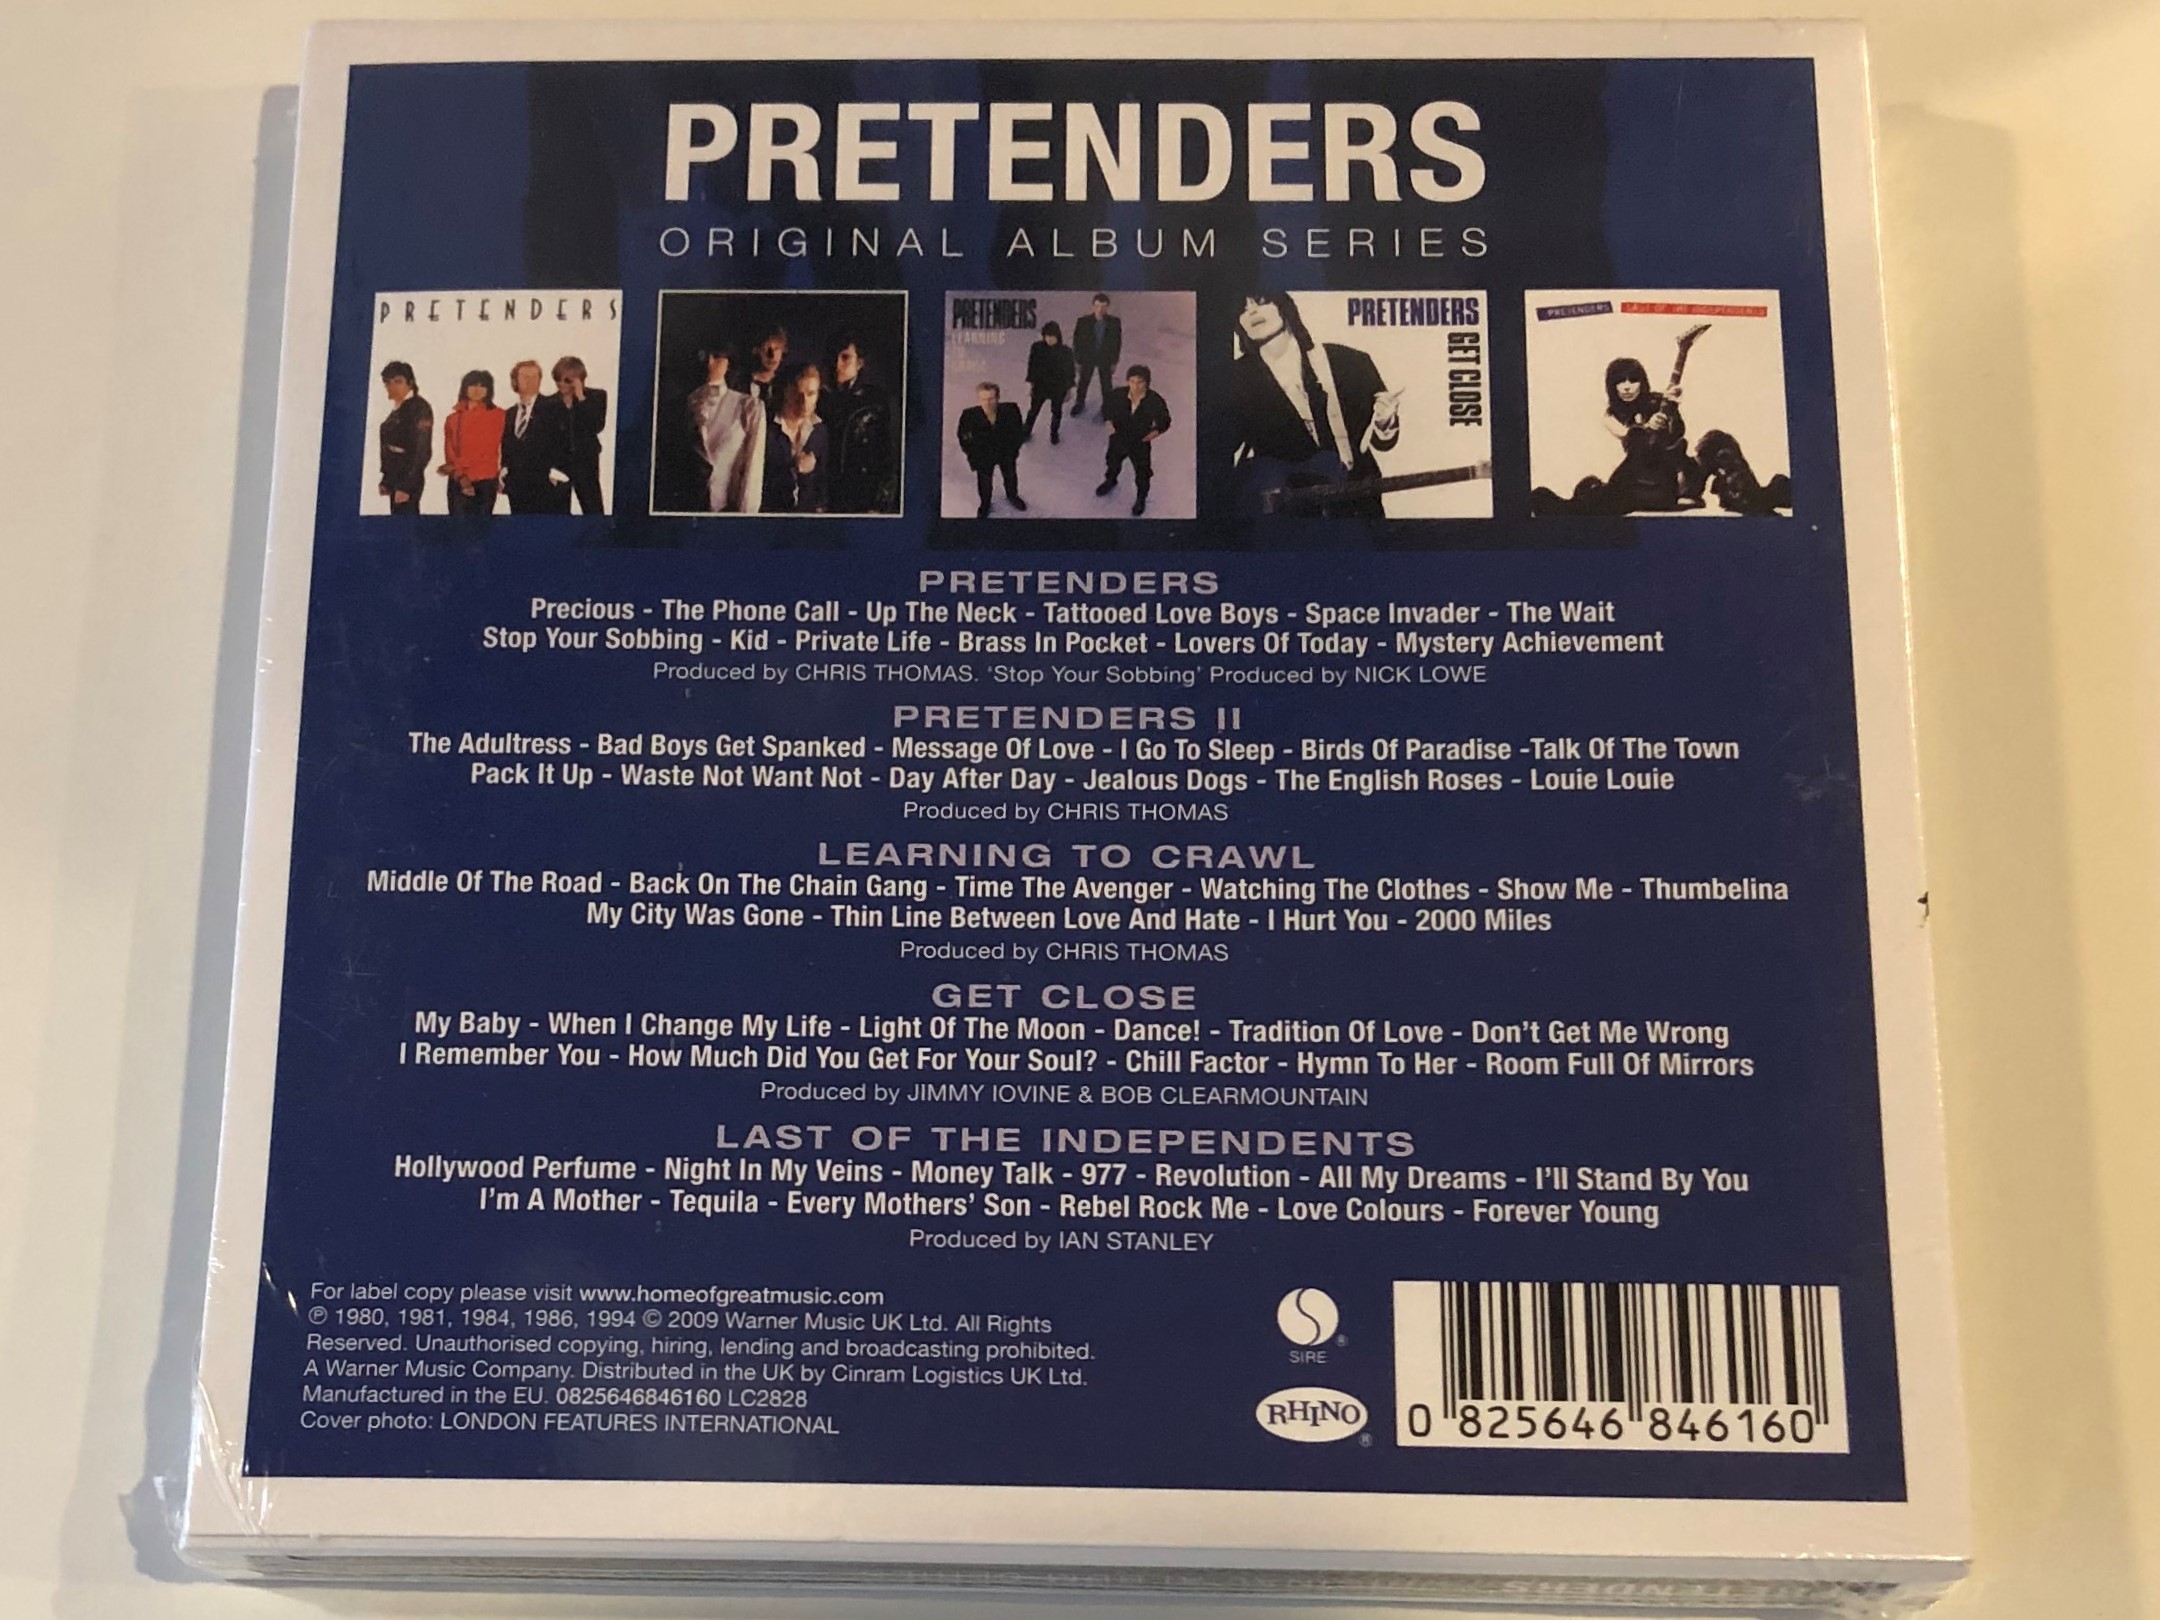 pretenders-original-album-series-rhino-records-audio-cd-2009-0825646846160-2-.jpg